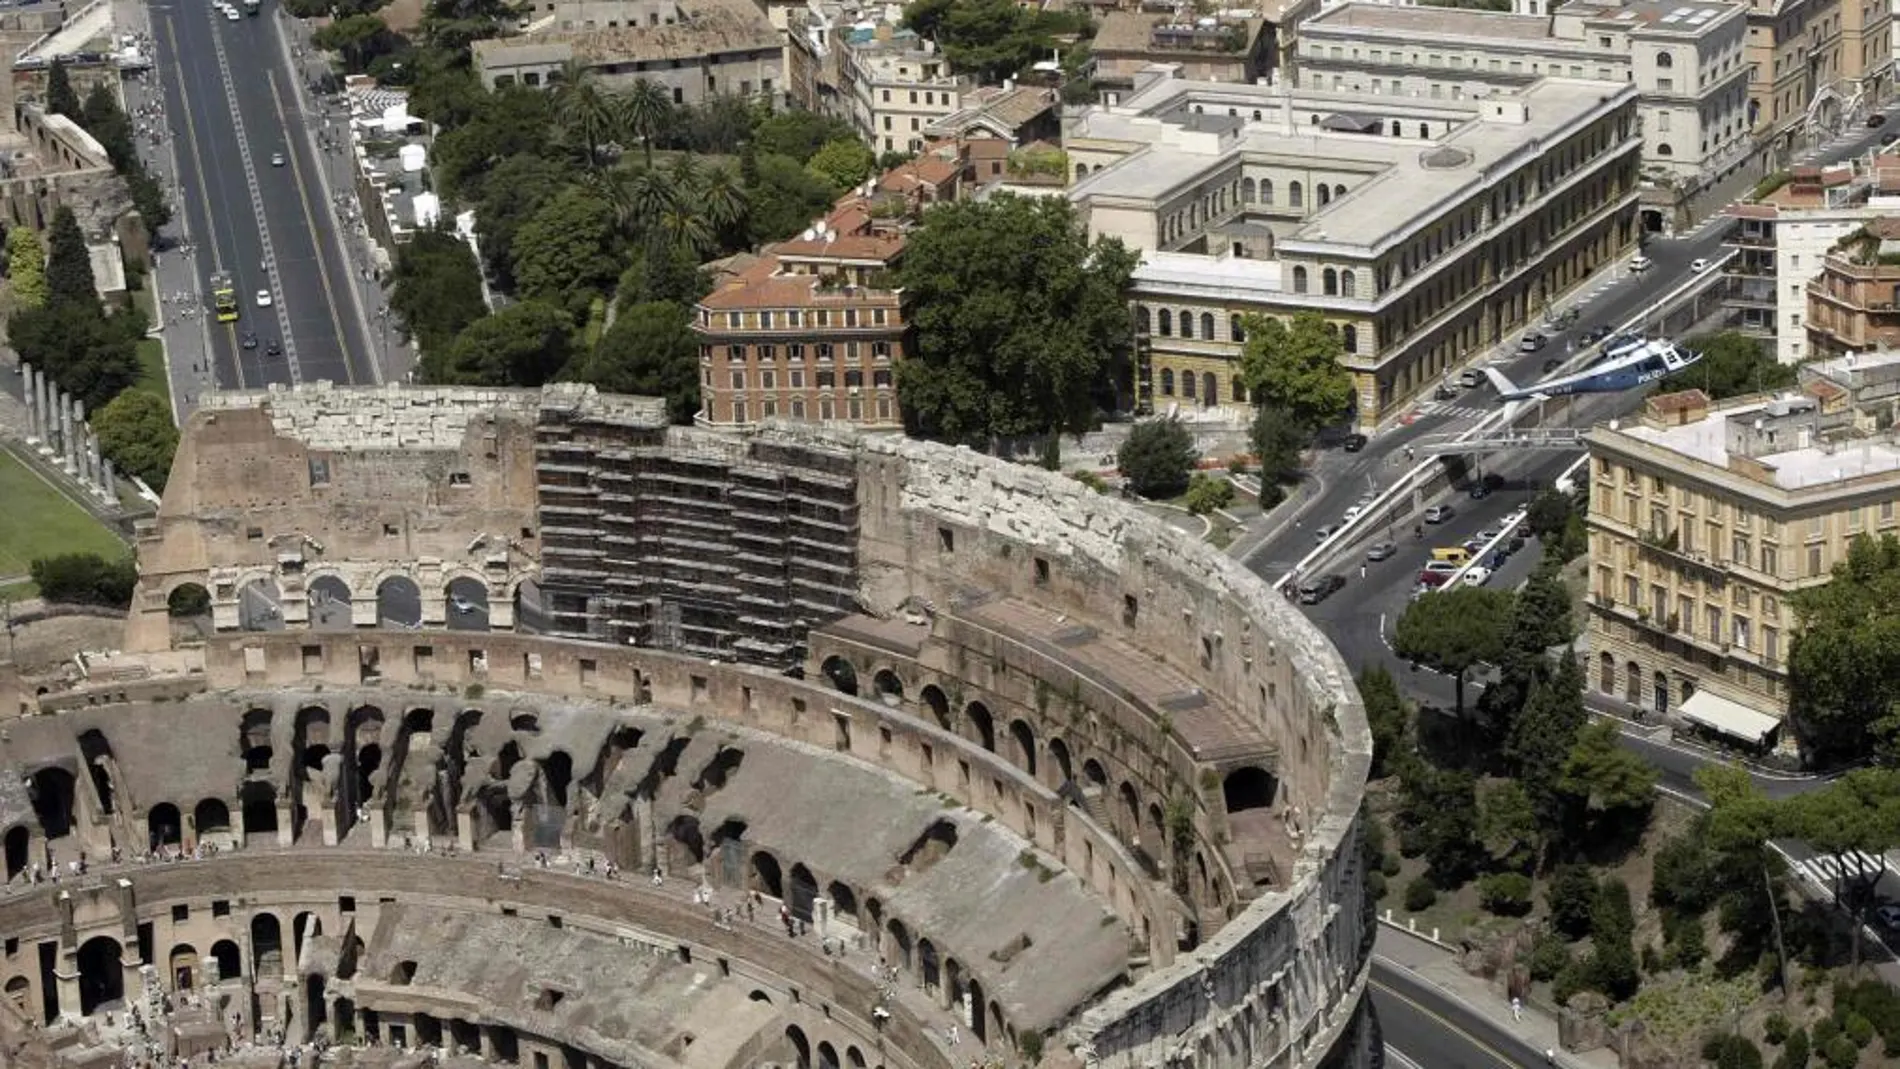 Imagen aérea del Coliseo de Roma